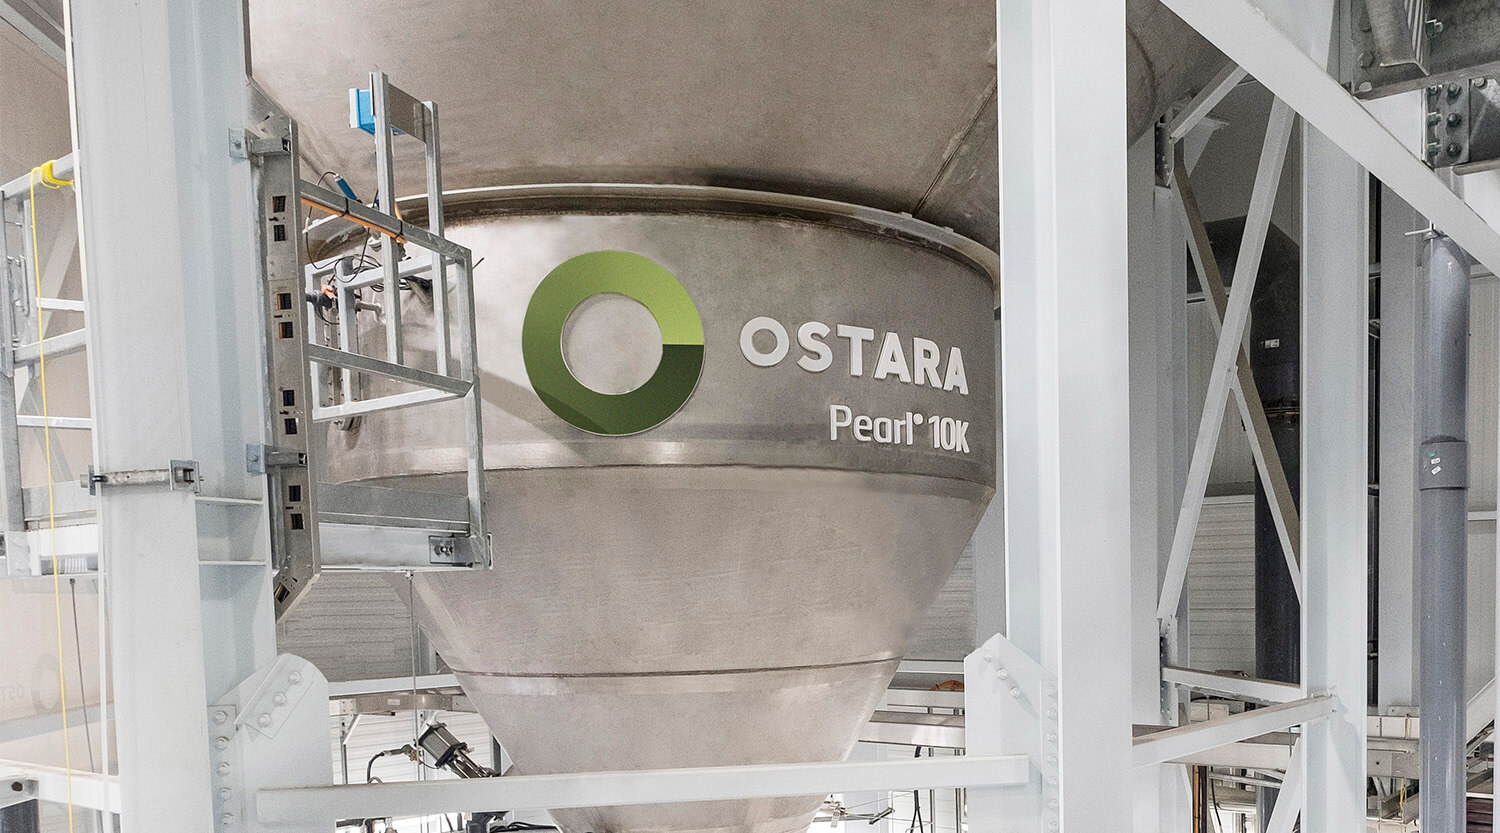 Ostara's Pearl® System by Evoqua